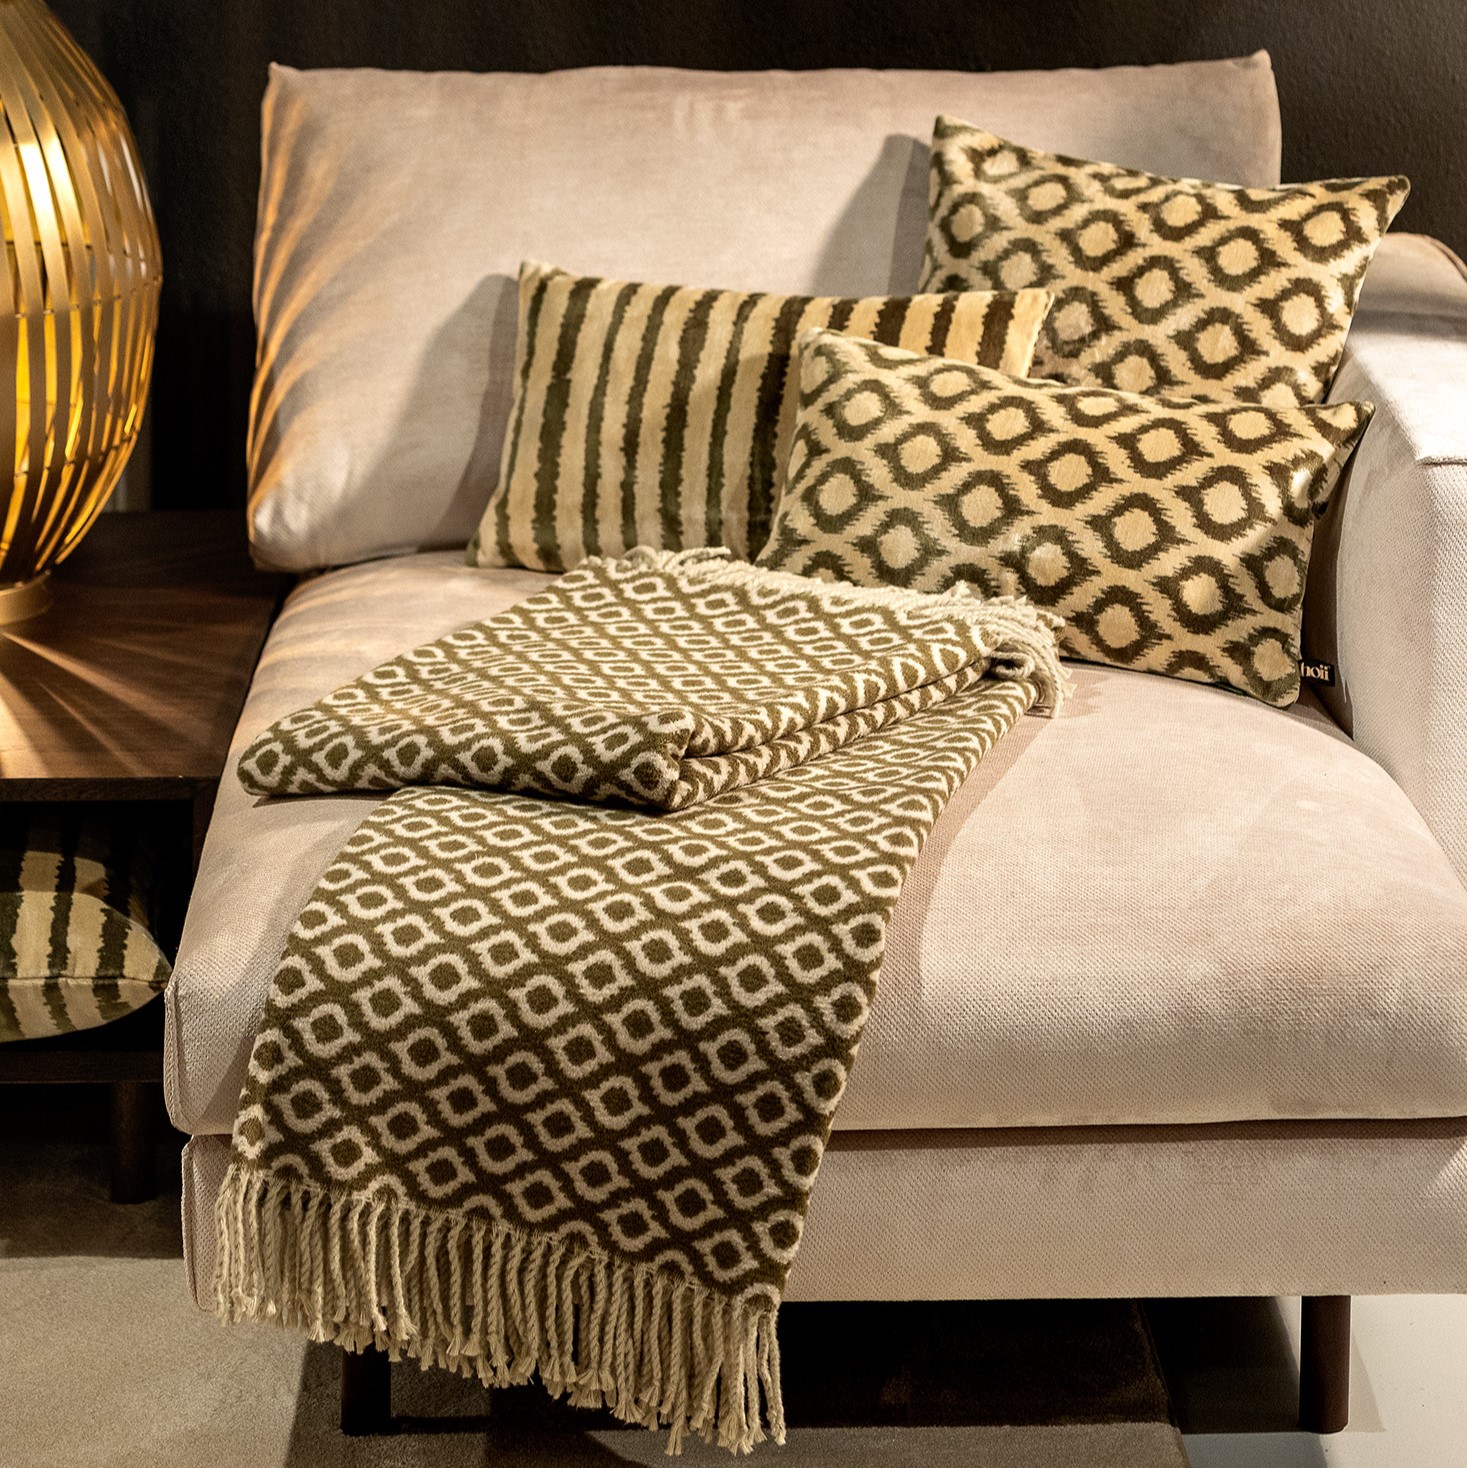 LORENZO | Cushion | 30x50 cm Military Olive | Green | Hoii | With luxury inner cushion